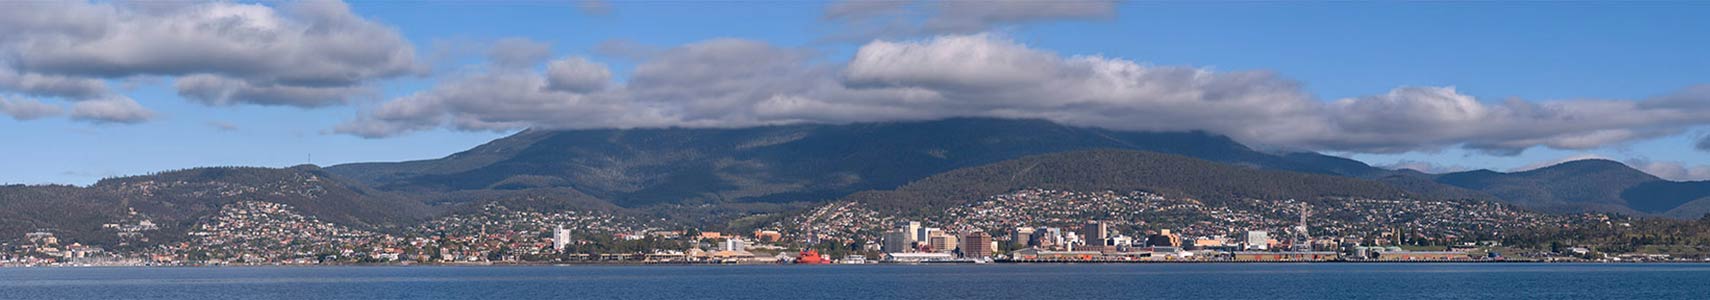 Panorama of Hobart, Tasmania, Australia